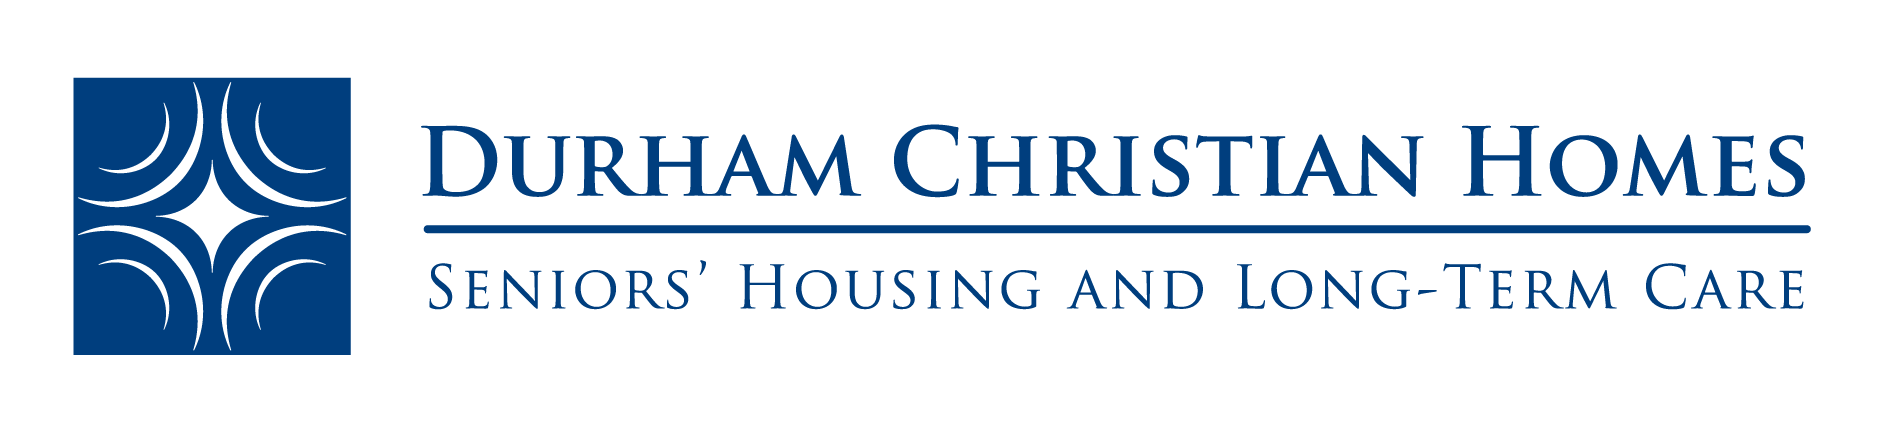 Durham Christian Homes Inc.